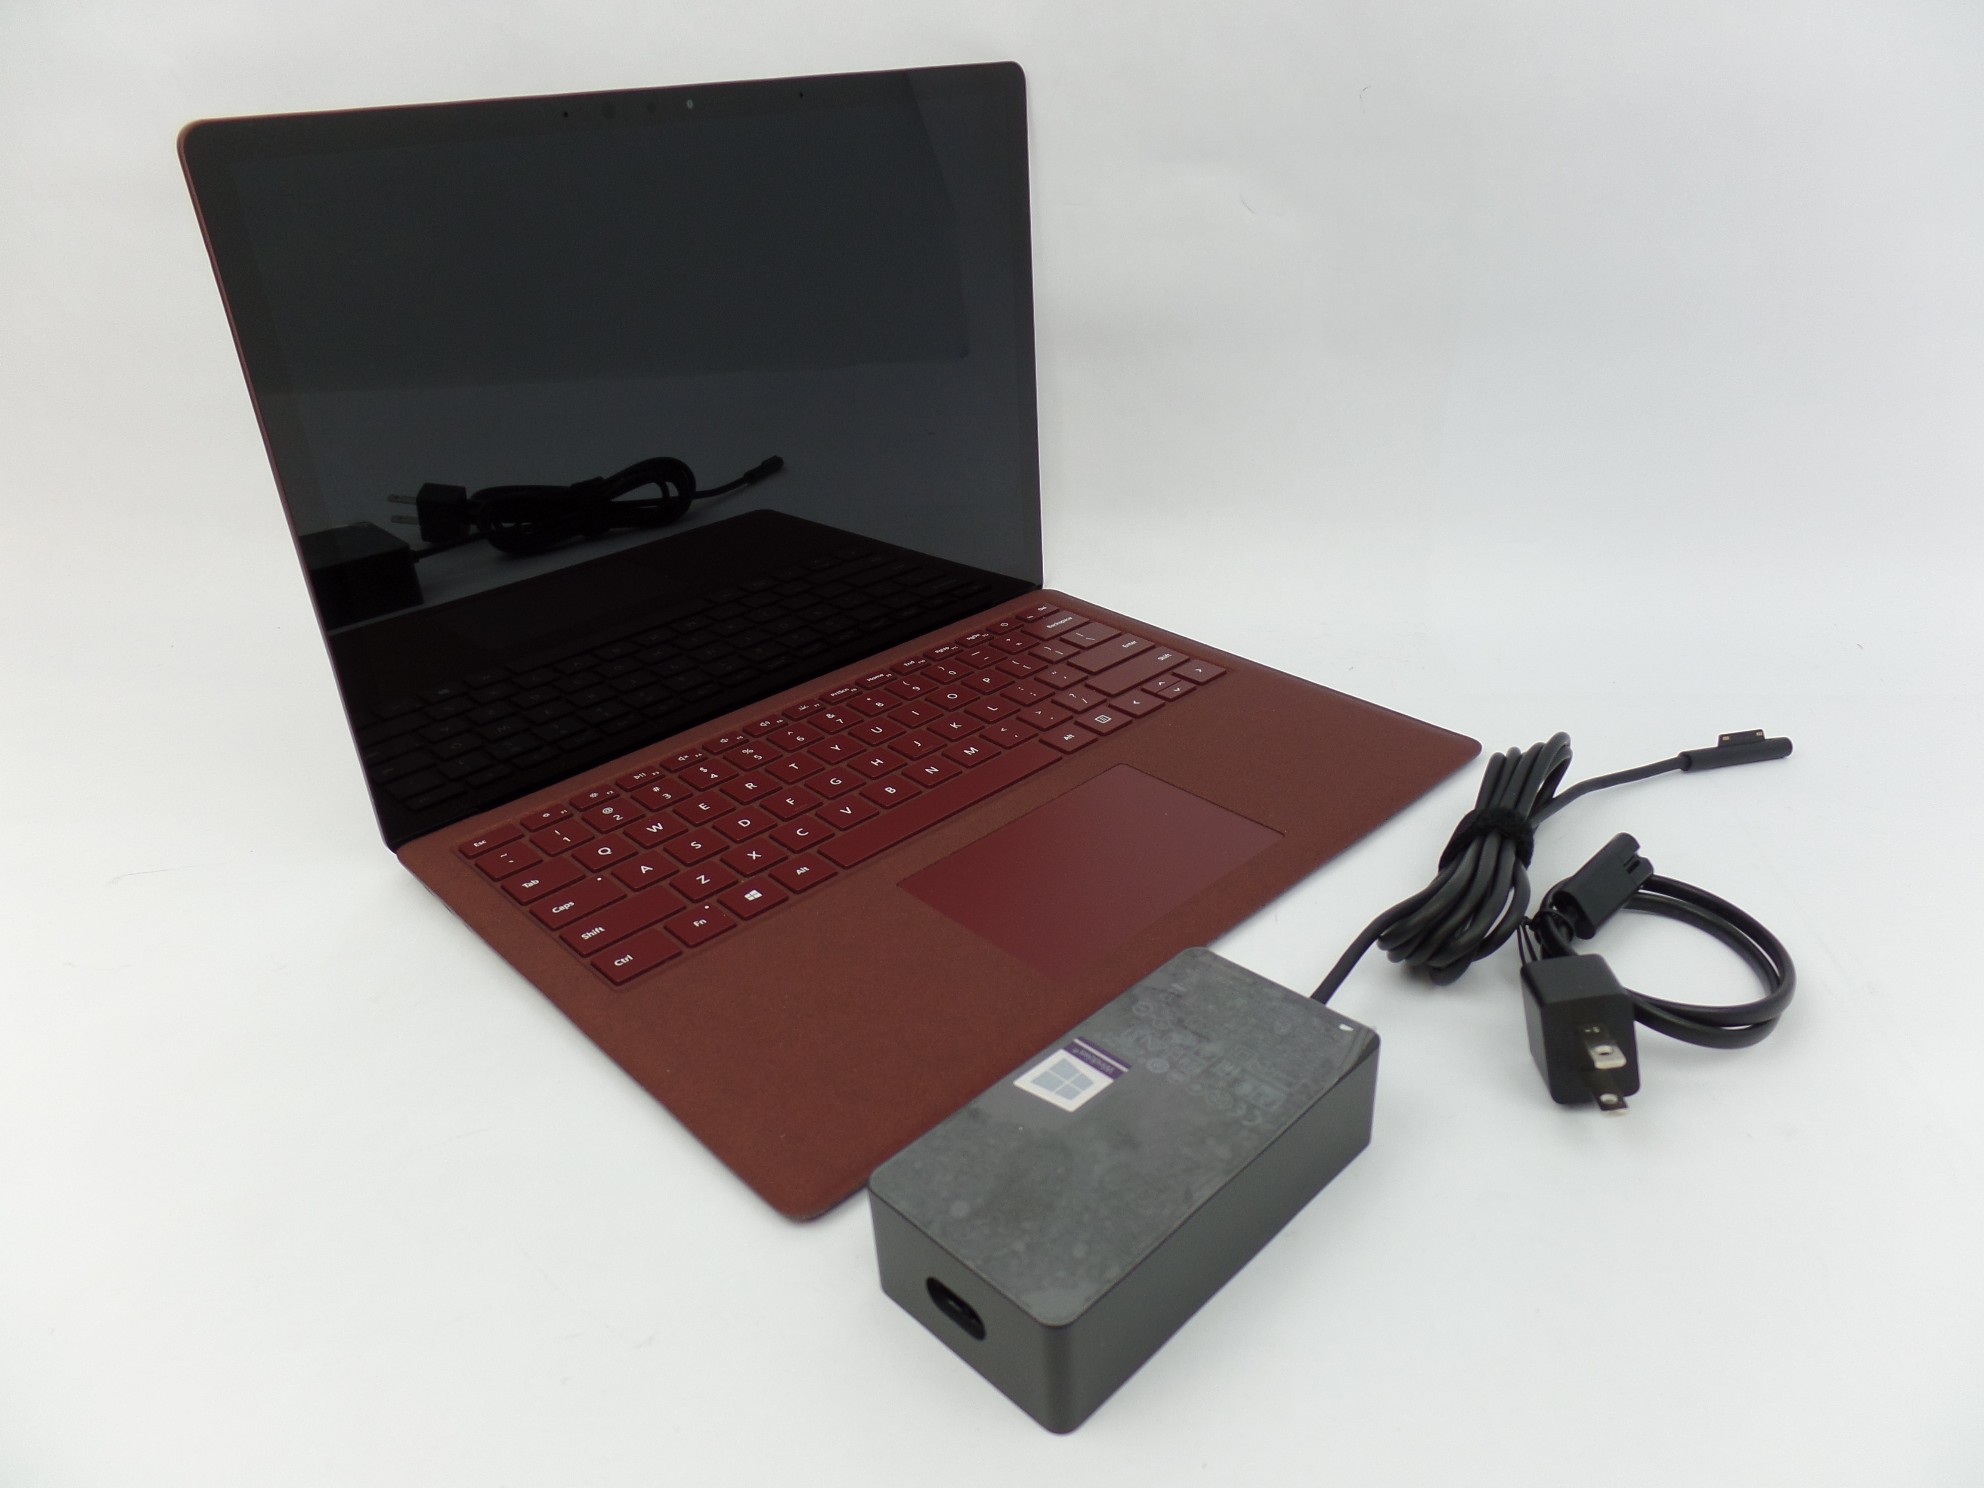 Microsoft Surface Laptop 2 1769 13.5" Touch i5-8250U 8GB 256GB W10 Burgundy SD